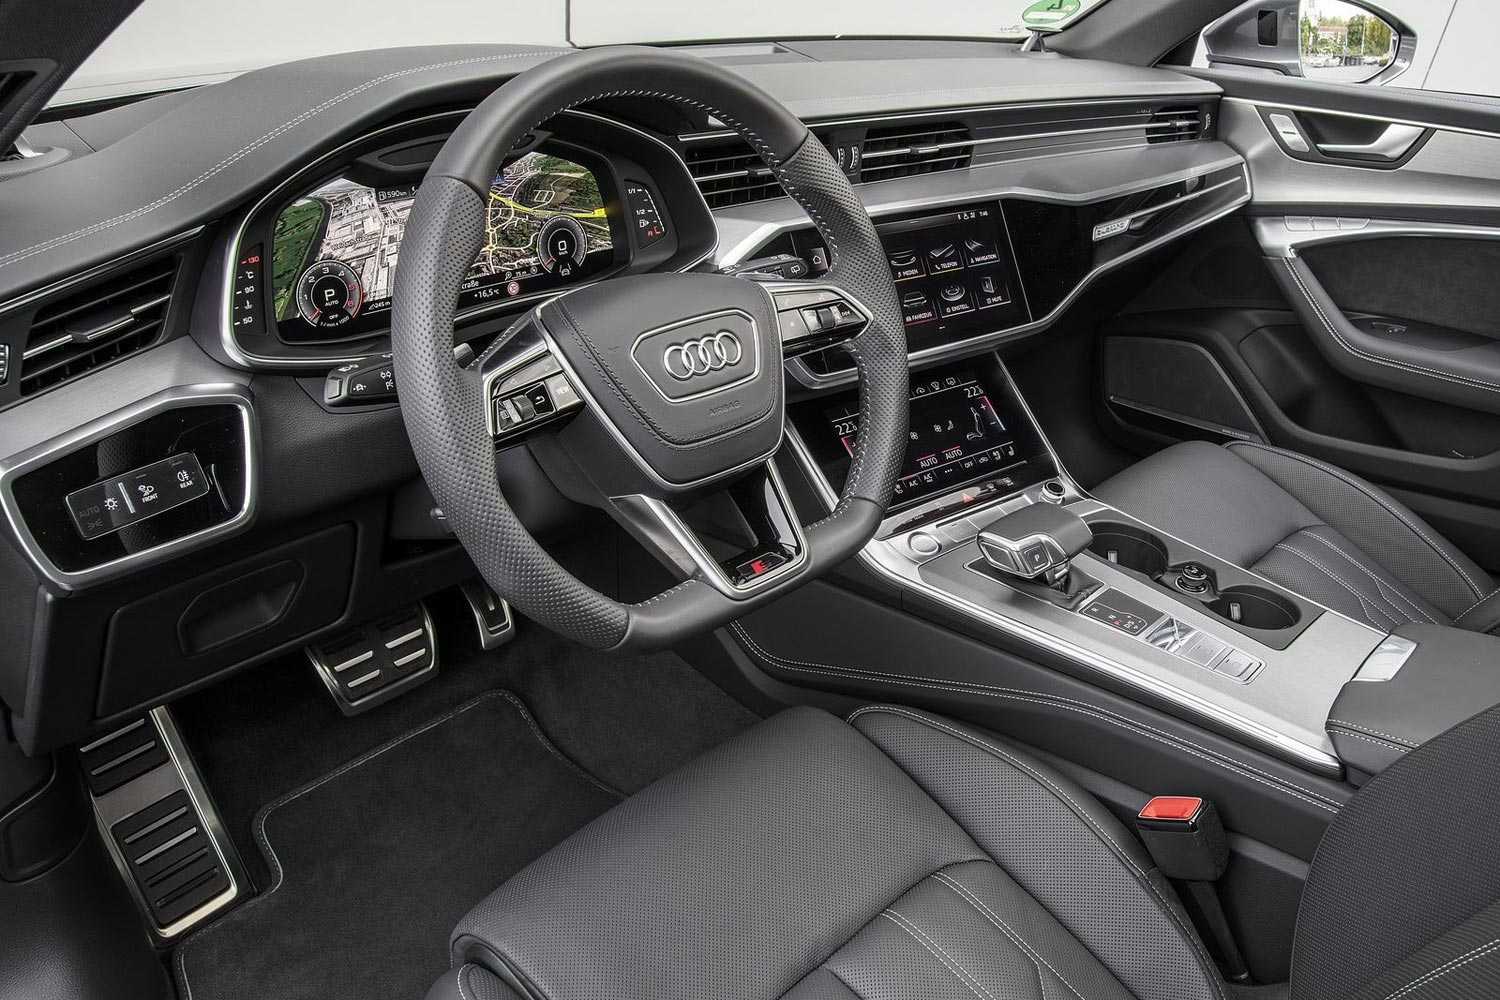 2019 6. 2019 Audi a6 avant Interior. Audi a6 avant 2019 салон. Audi a6 2018 салон. Audi a6 c8 салон.